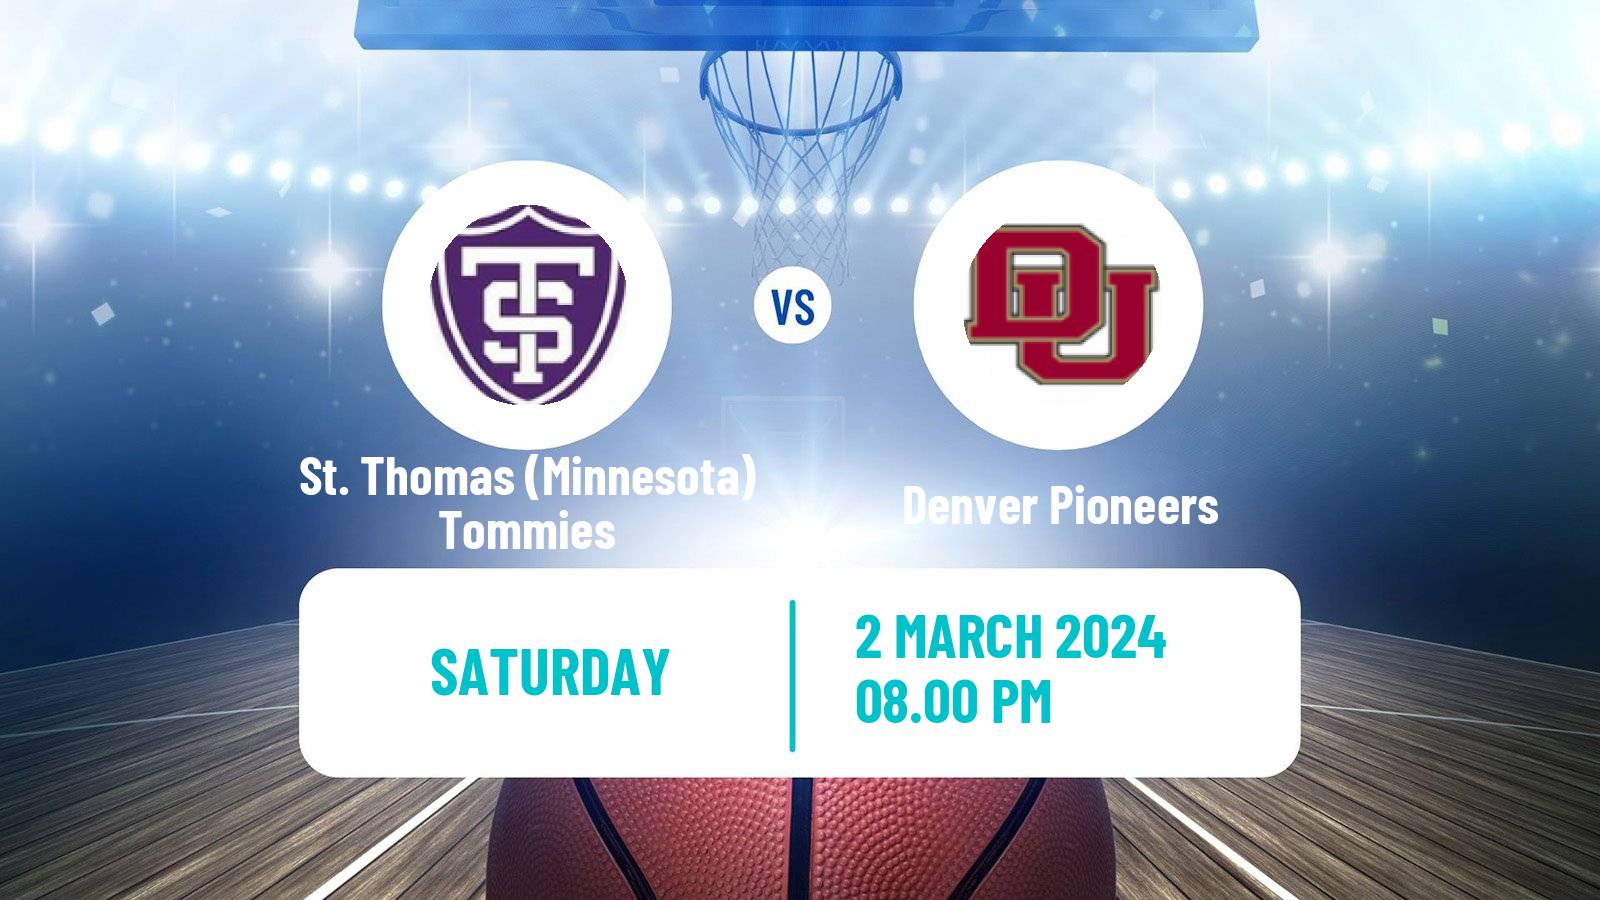 Basketball NCAA College Basketball St. Thomas (Minnesota) Tommies - Denver Pioneers